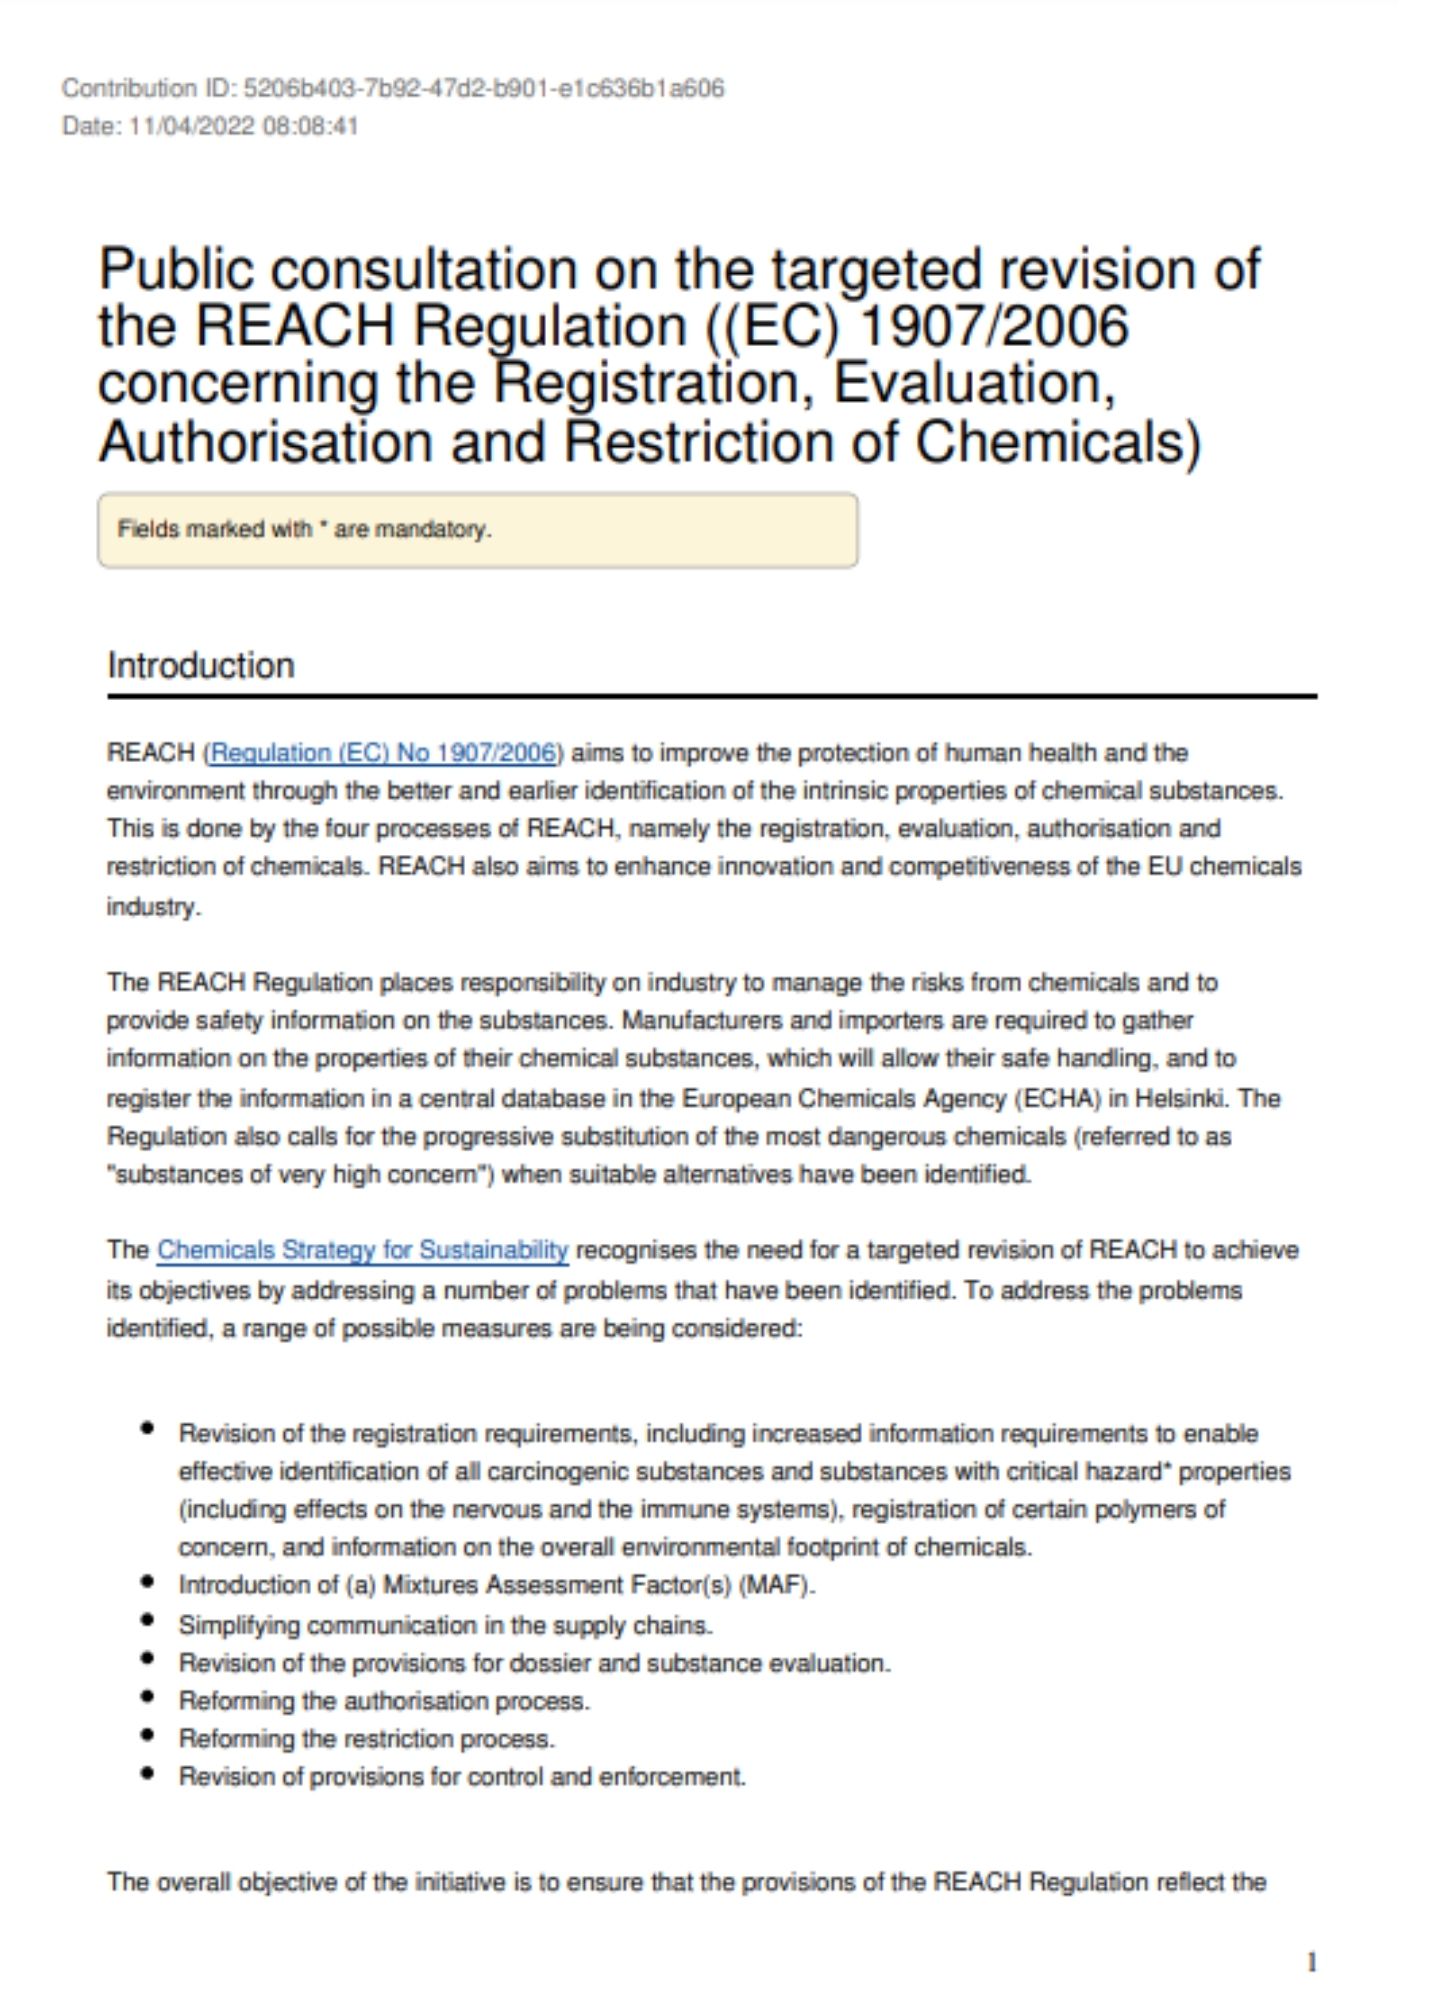 EurEau input to the REACH public consultation